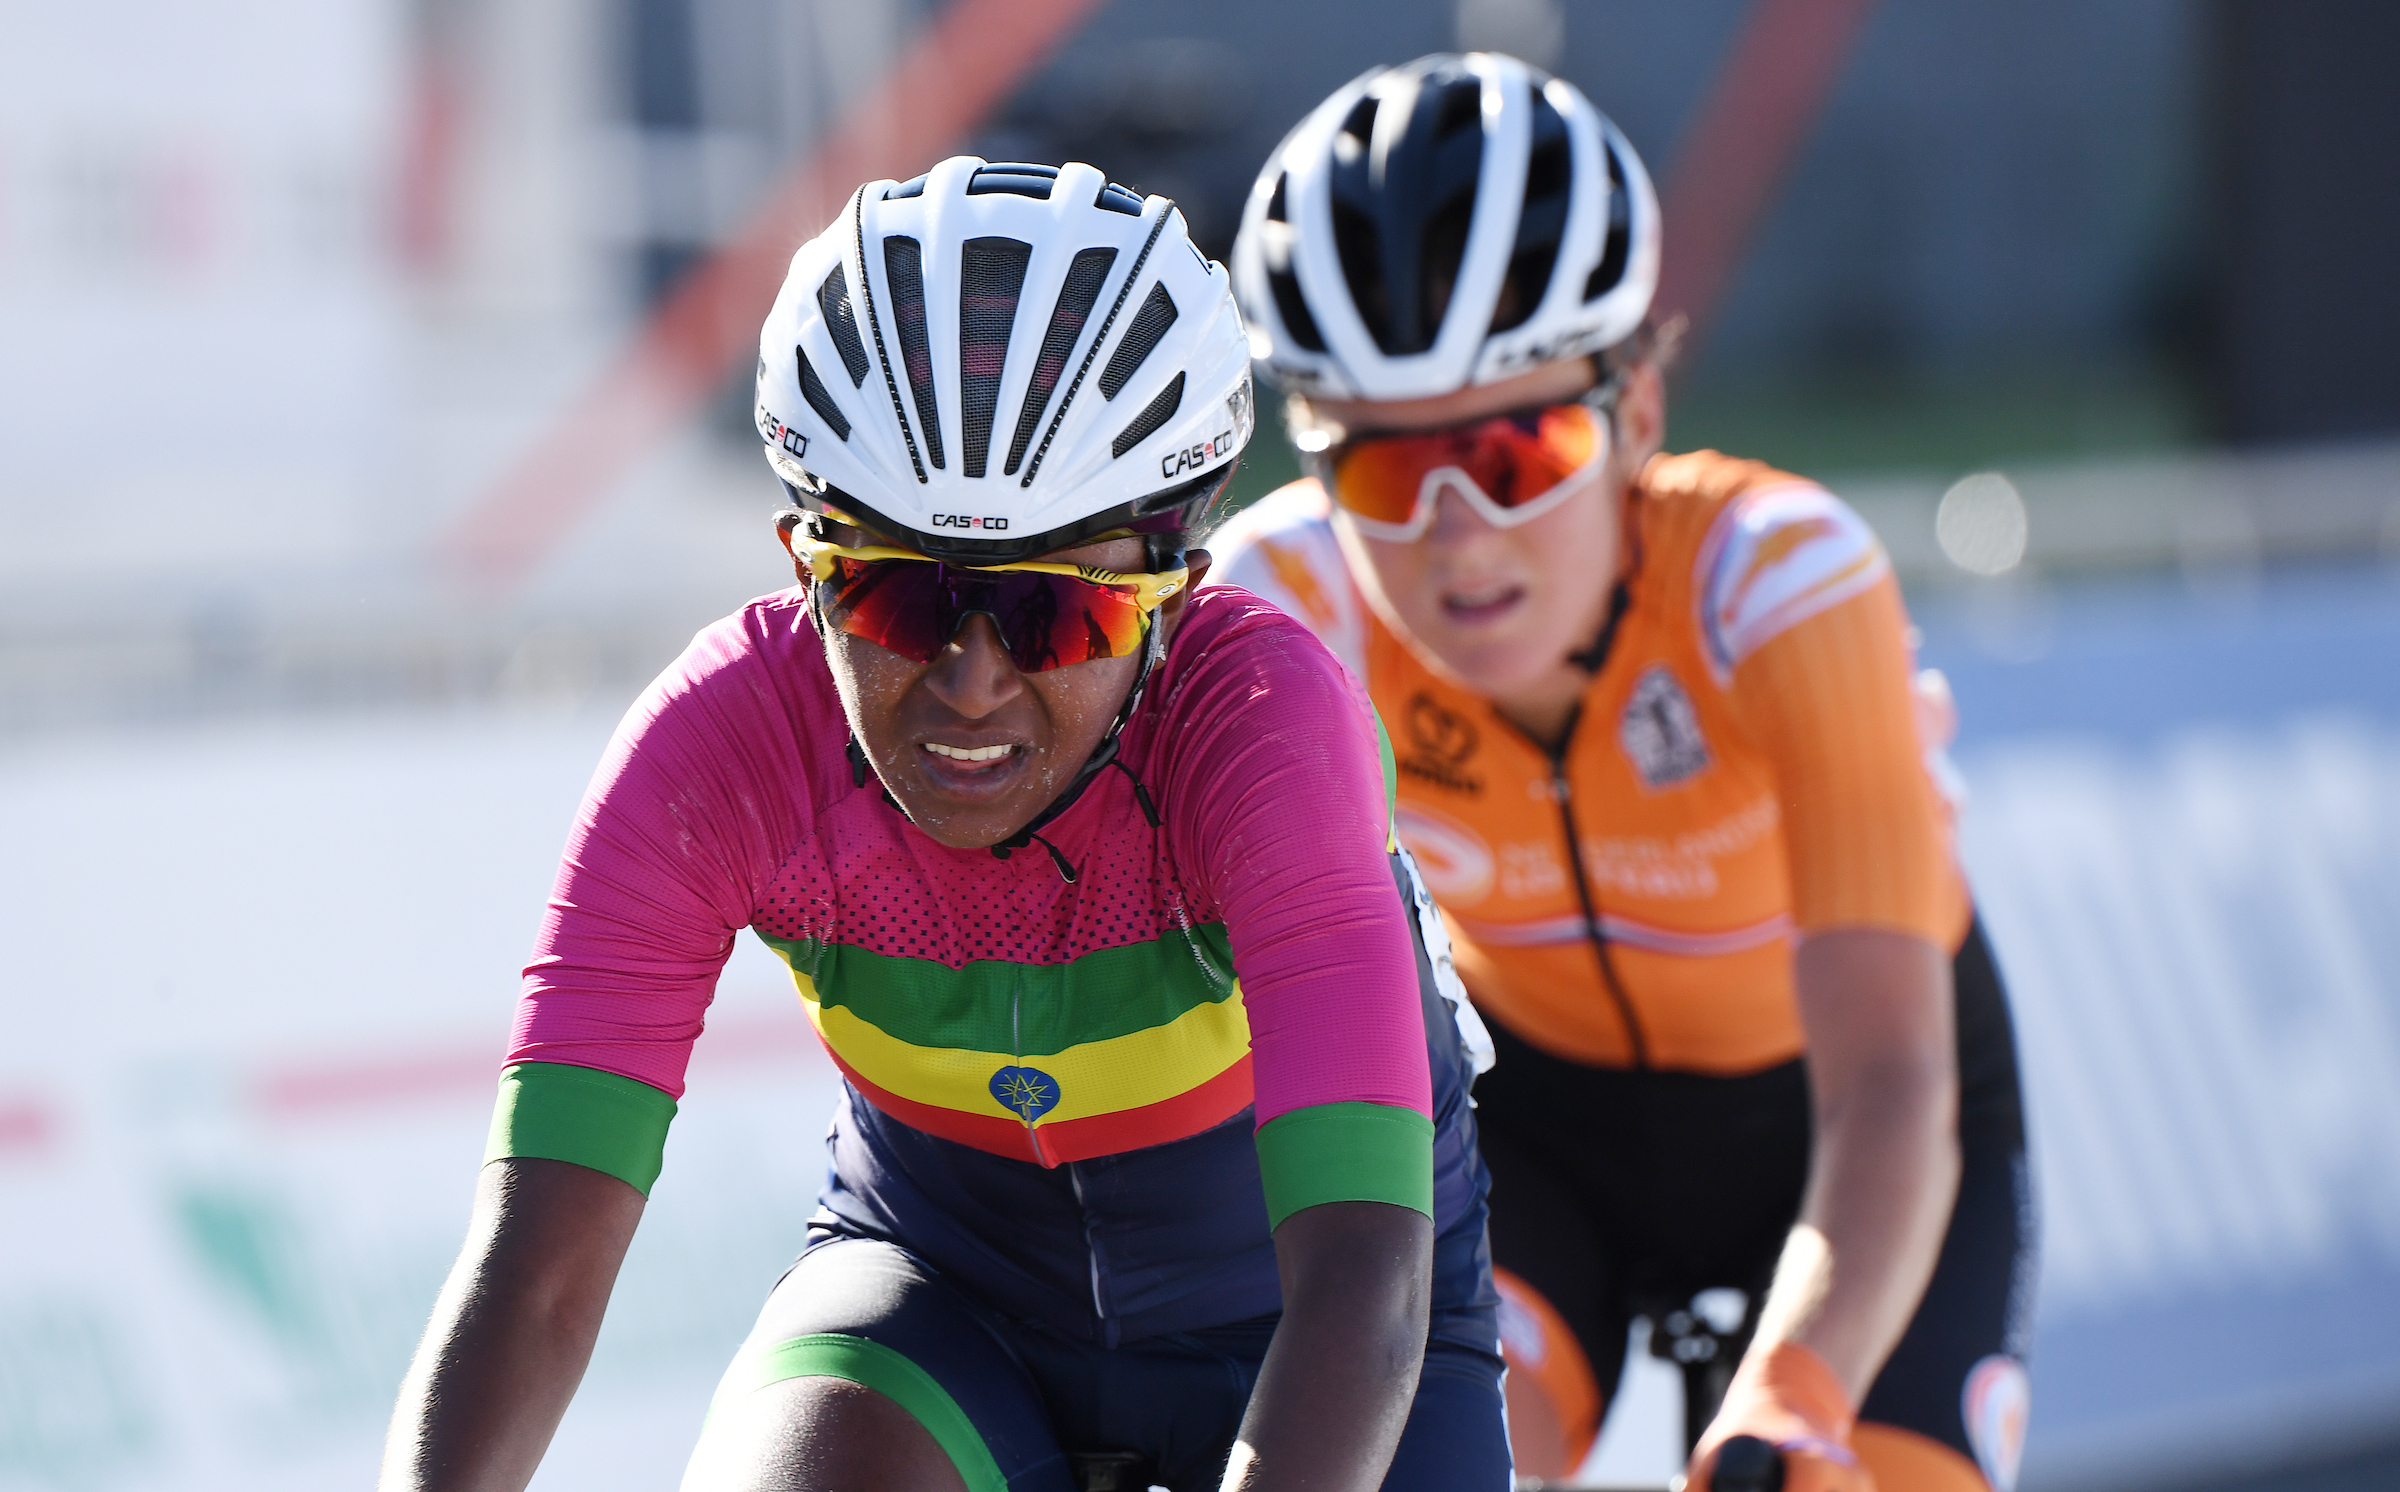 Fotografía de Simon WilkinsonSWpixcom 26092020 Ciclismo Campeonato Mundial de Ciclismo en Ruta UCI 2020 IMOLA EMILIAROMAGNA ITALIA Carrera de ruta de élite femenina Eyeru Tesfoam Gebru de Etiopía